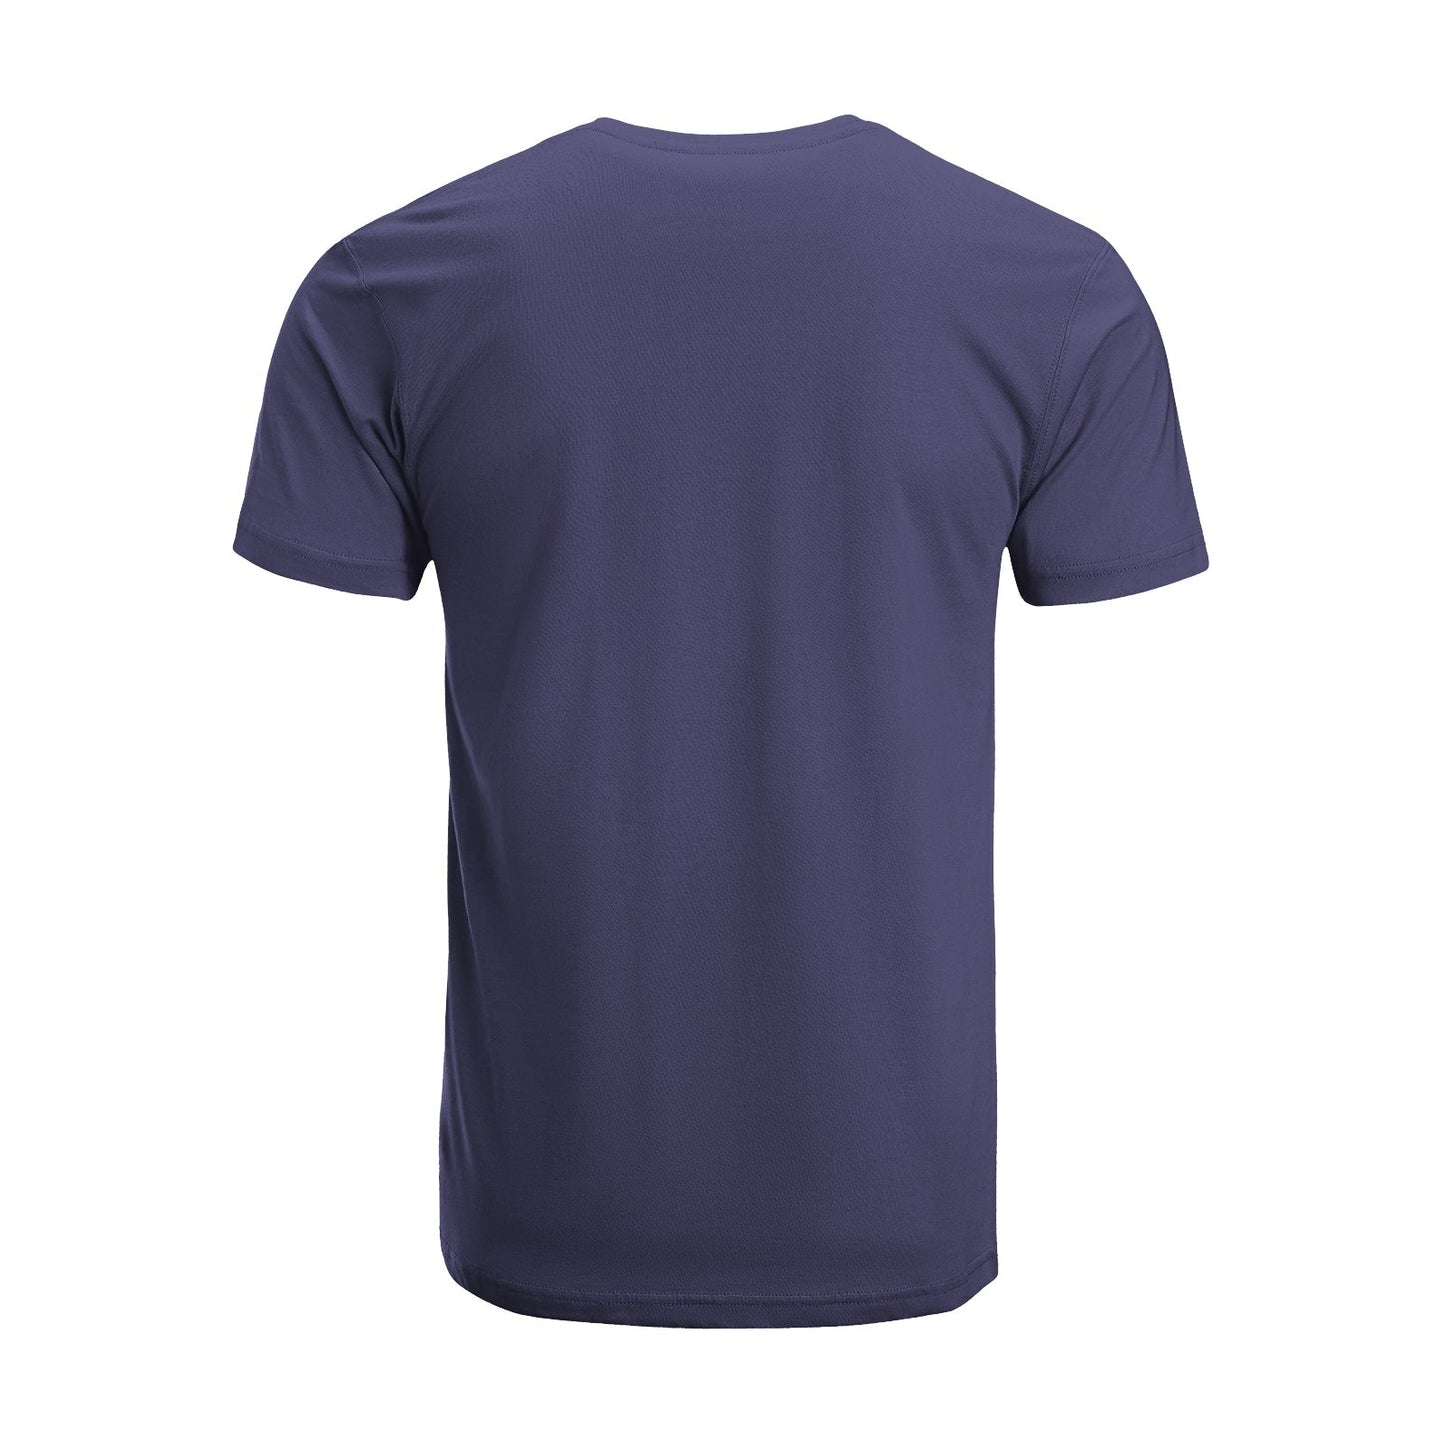 Unisex Short Sleeve Crew Neck Cotton Jersey T-Shirt CAT 12 - Tara-Outfits.com